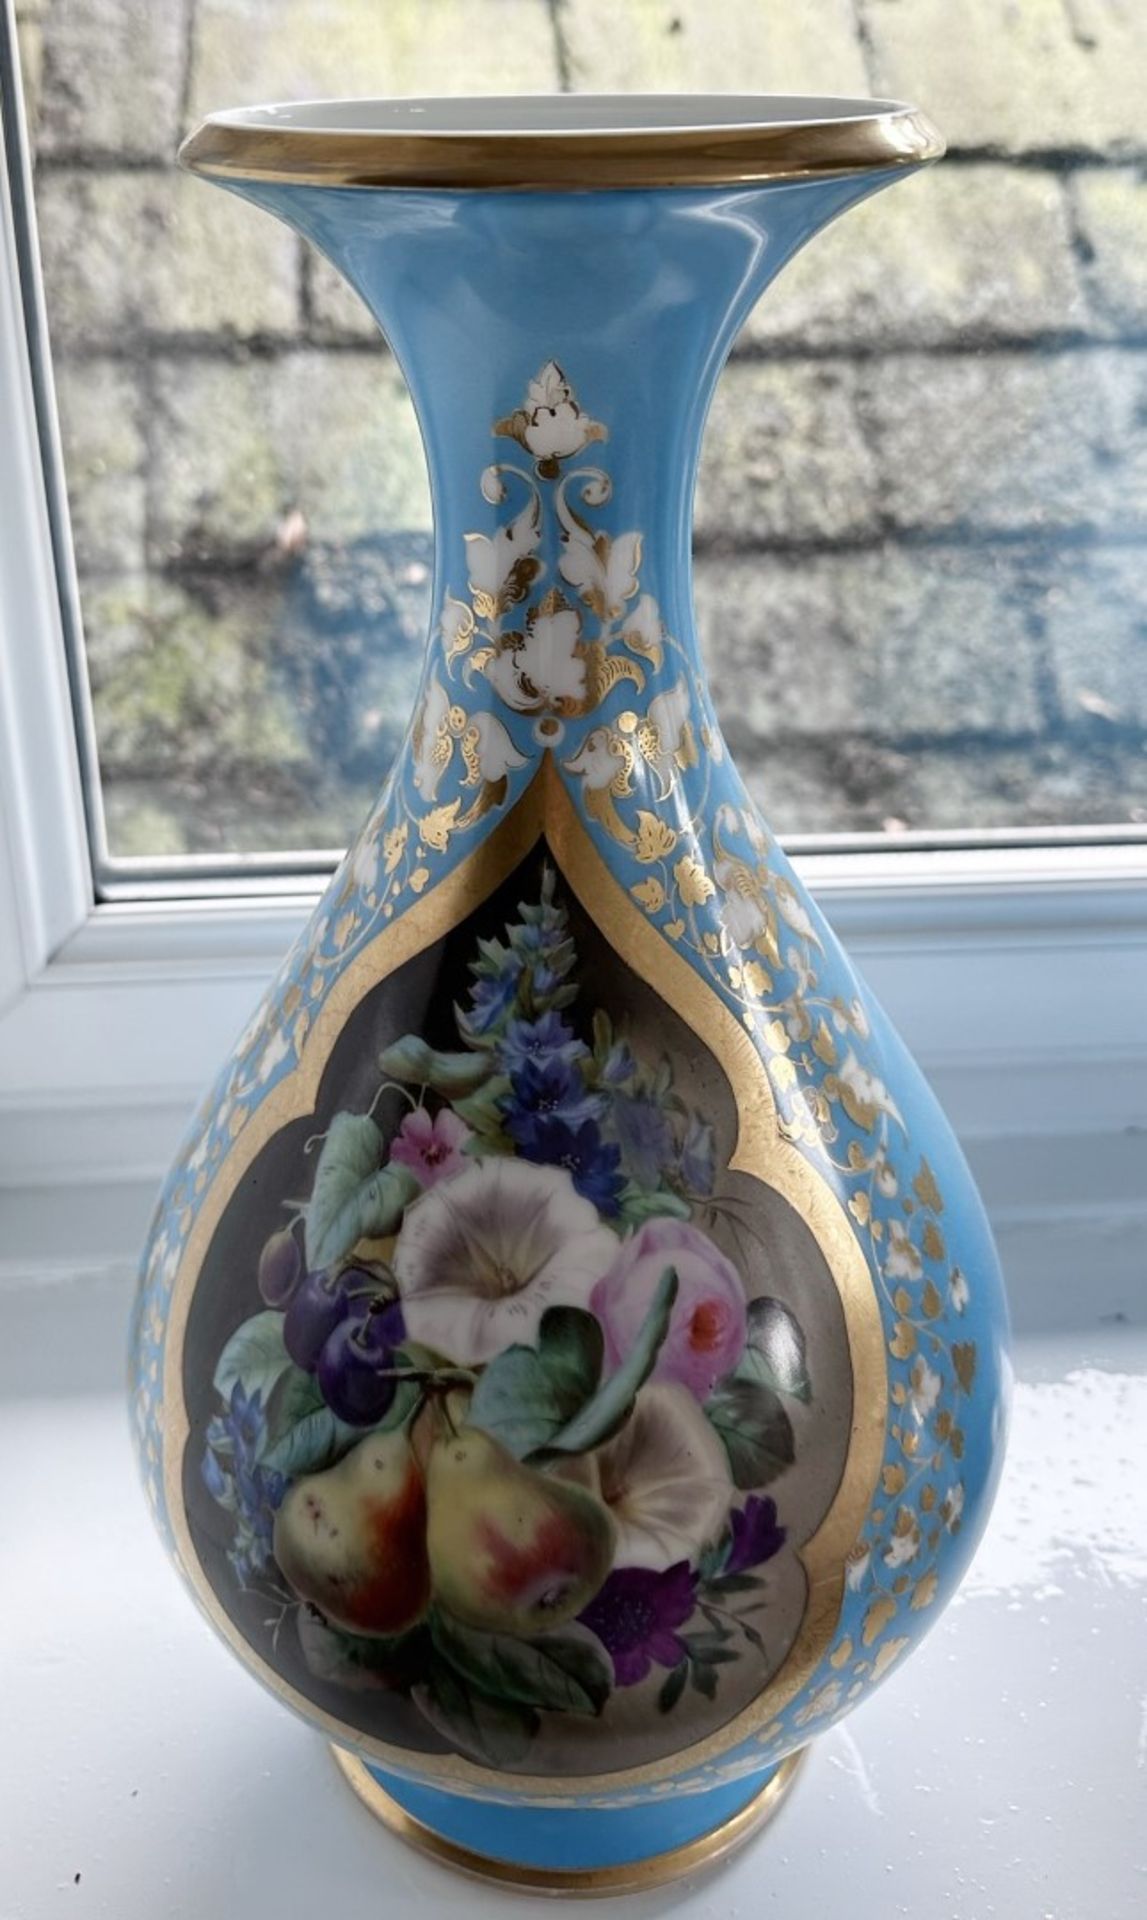 2 x VINTAGE Cloisonne French Fine Bone China Vases With Gold Leaf Design - Image 8 of 12